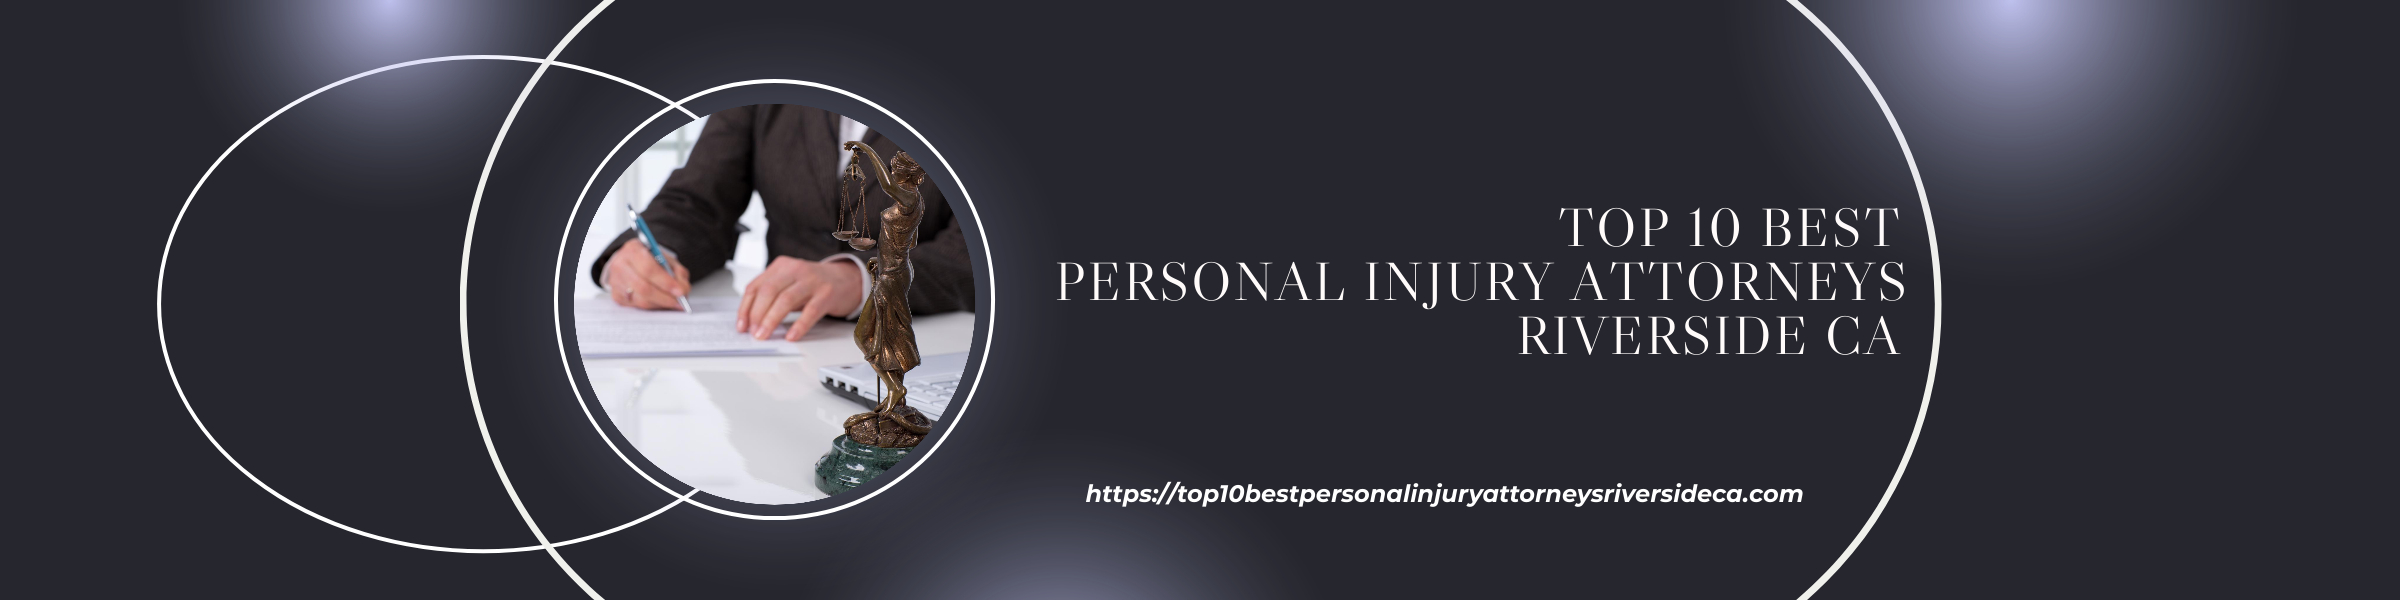 Top 10 Best Personal Injury Attorneys Riverside CA